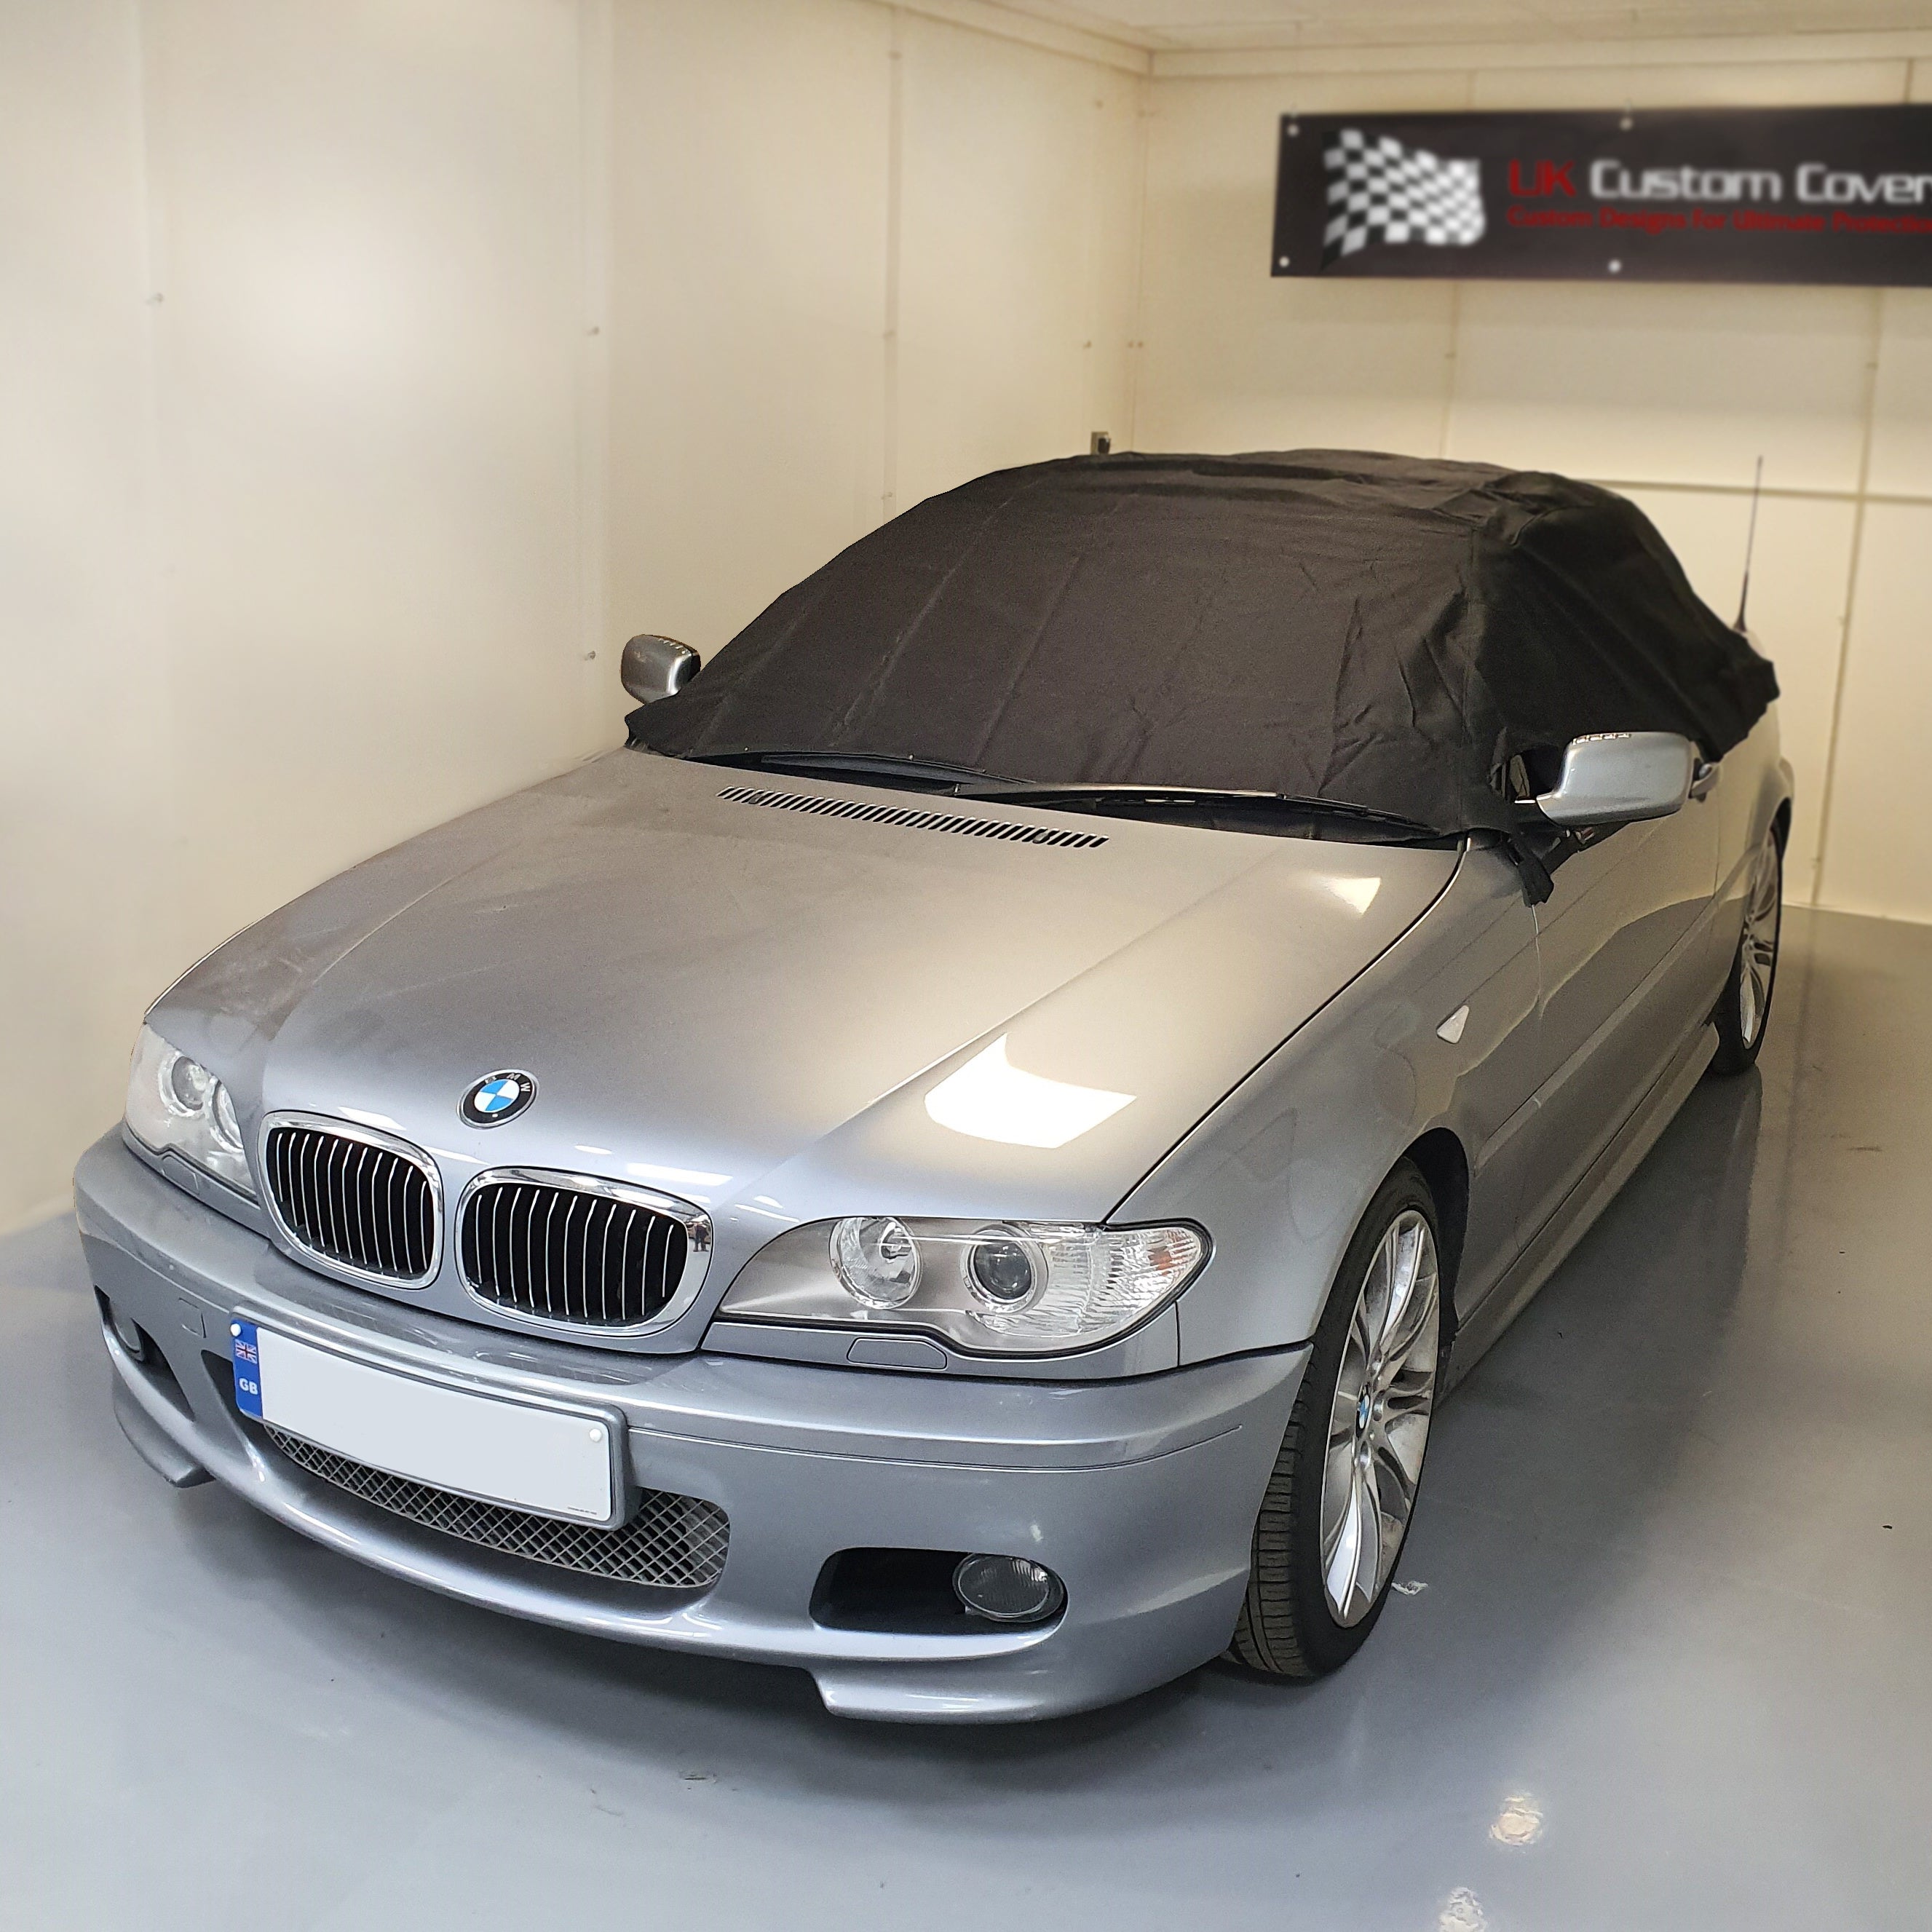 Media cubierta de techo blando para BMW E46 - 1999 a 2005 (571) - NEGRO